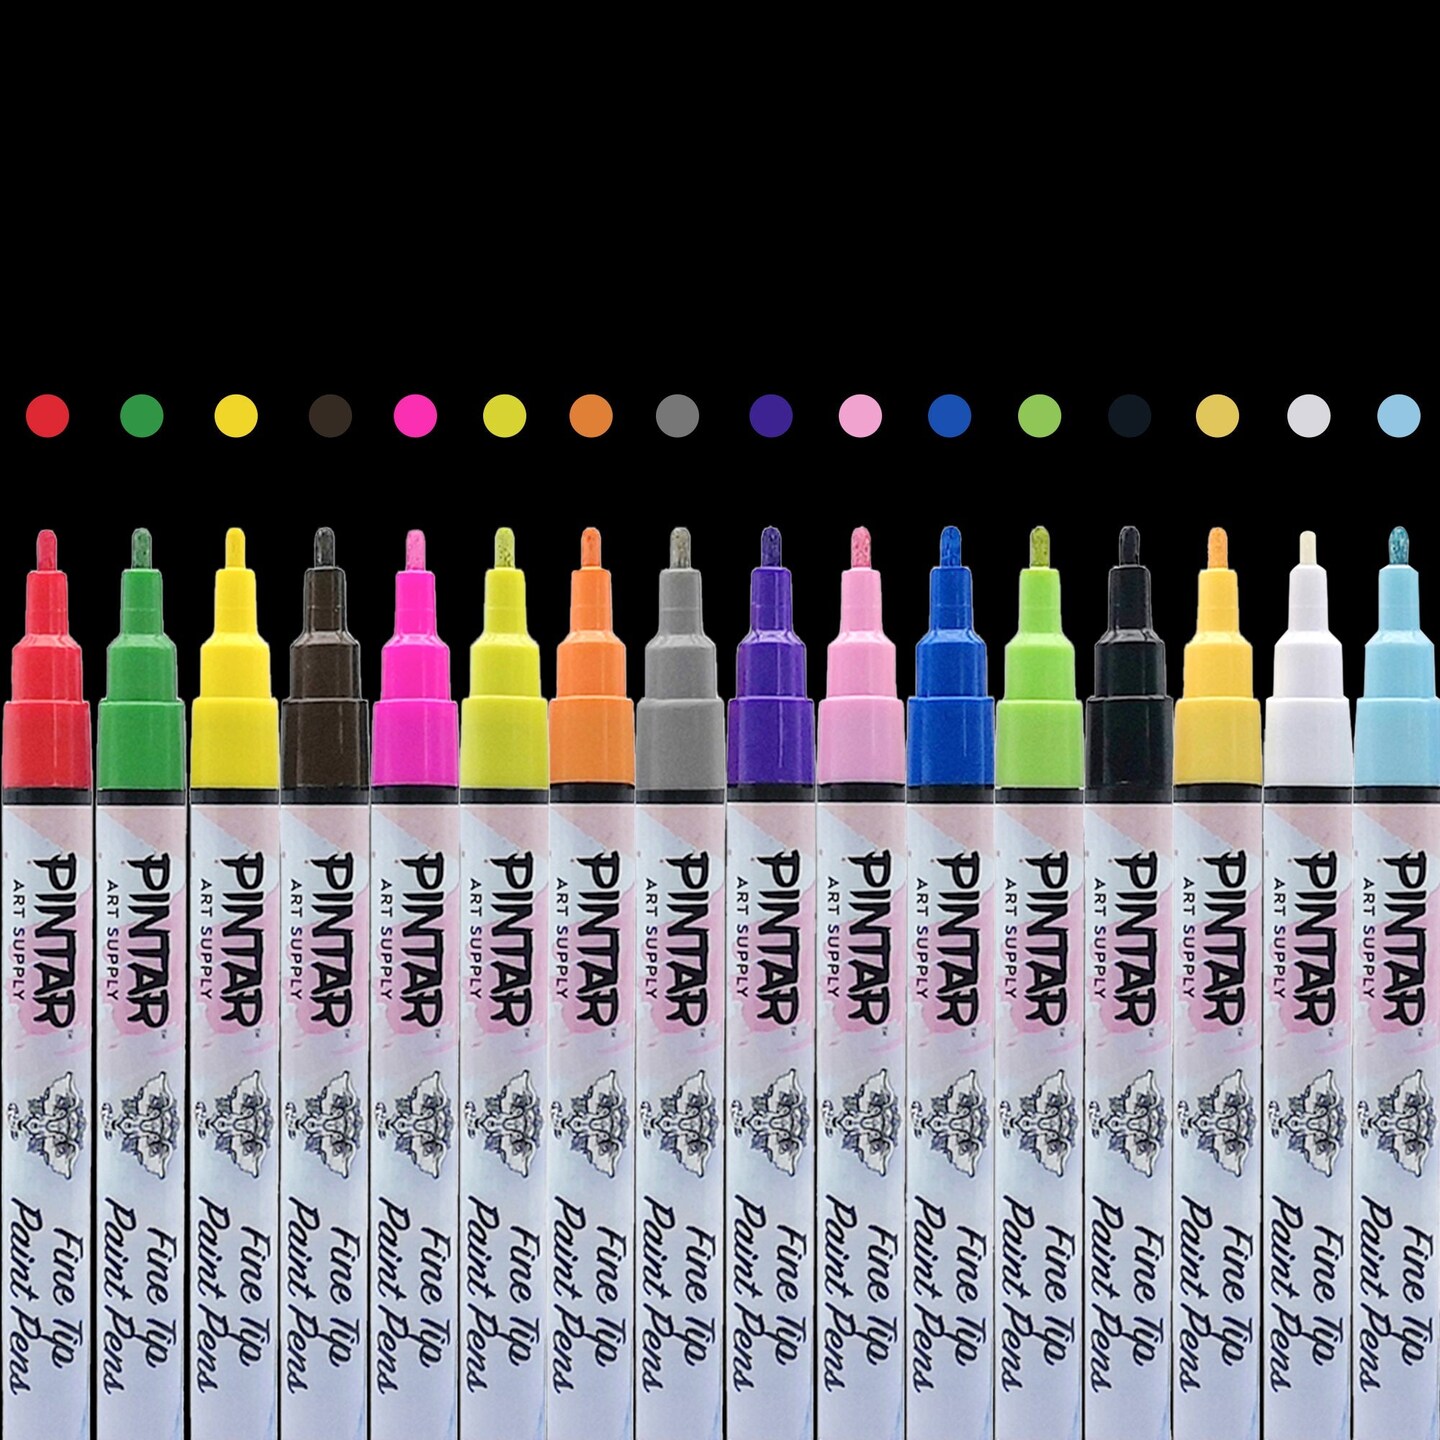 PINTAR Premium Acrylic Paint Pens - 1mm Fine Tip Pens For Rock Painting,  Ceramic Glass, Wood, Paper, Fabric & Porcelain, Water Resistant Paint Set,  Surface Pen, Craft Supplies, DIY Project (16 colors)